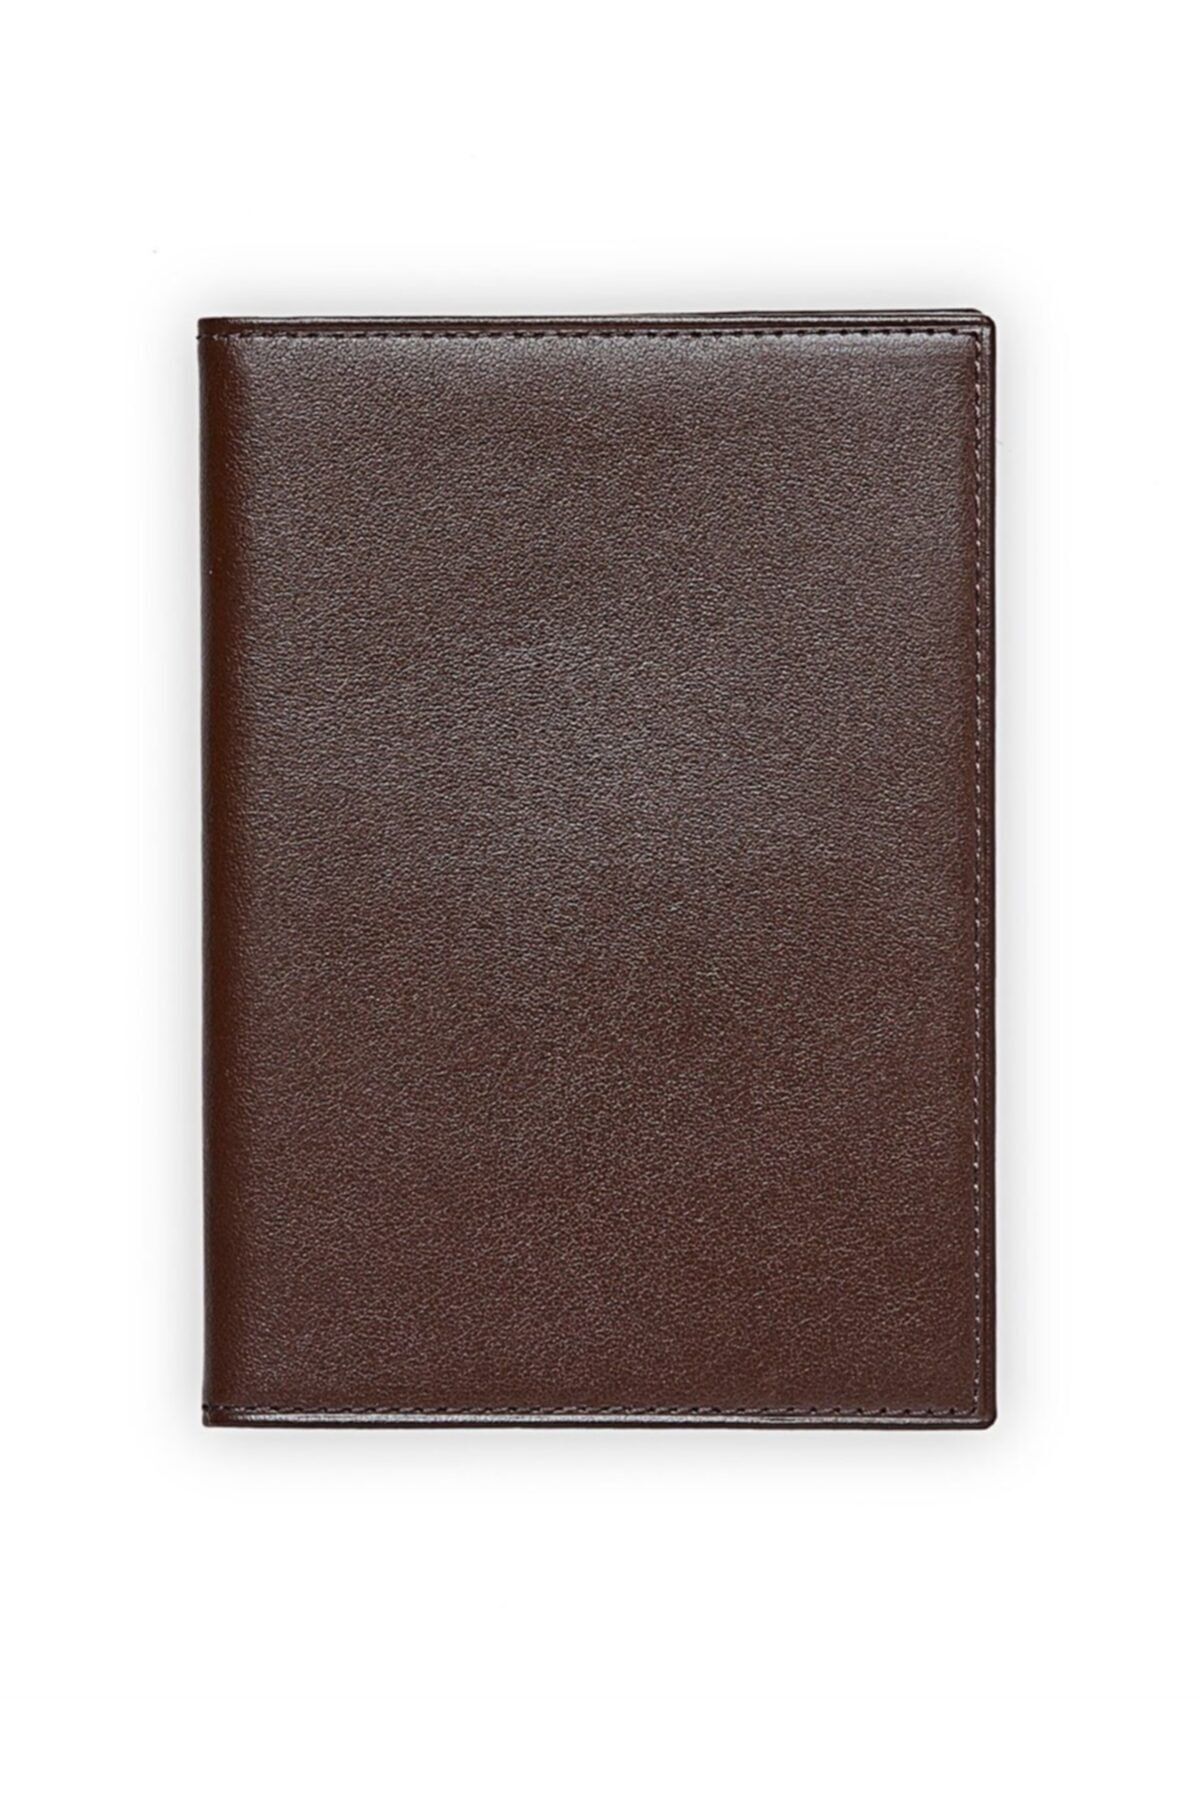 EMNANA Deri Pasaport Cüzdanı - Kahverengi